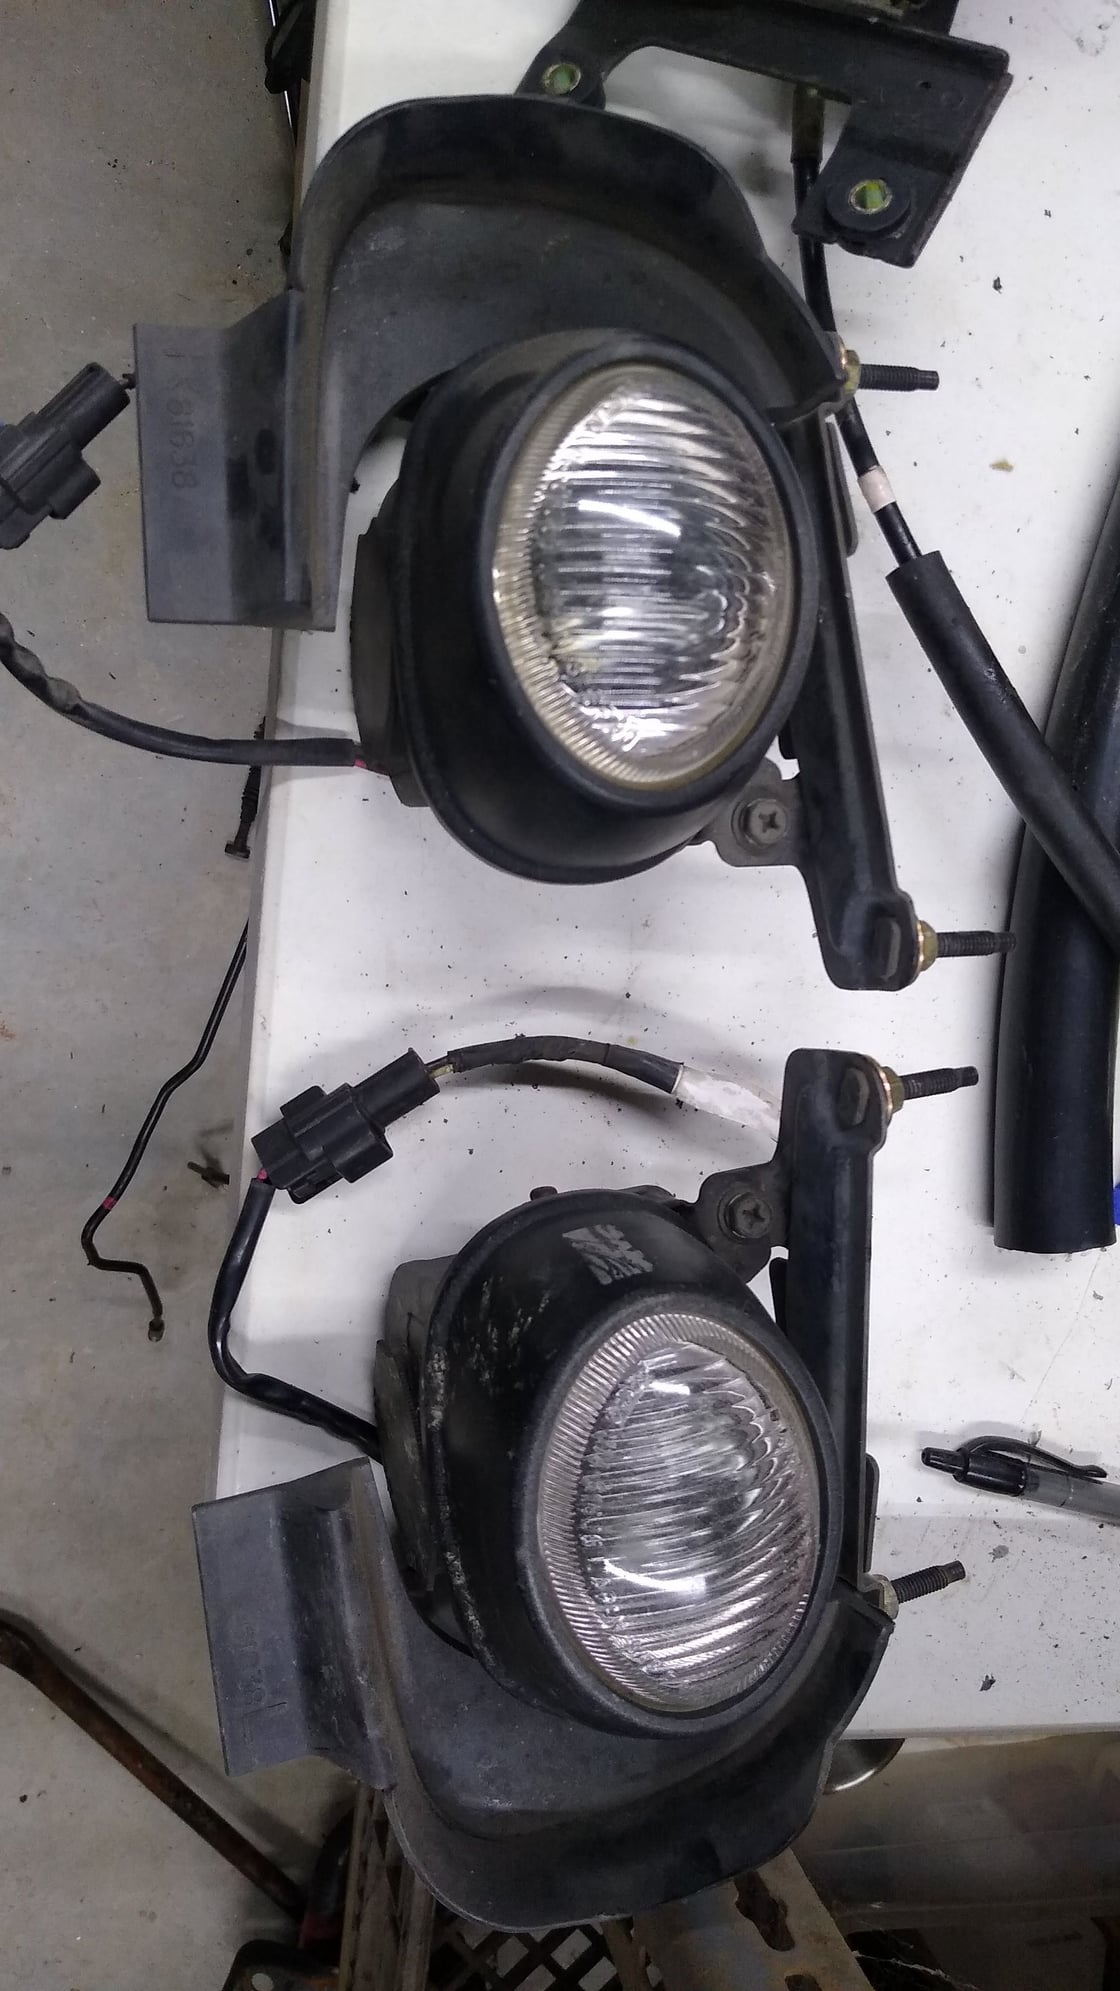 Exterior Body Parts - 94' FD Fog Lights - Used - 1993 to 1998 Mazda RX-7 - Dawsonville, GA 30534, United States